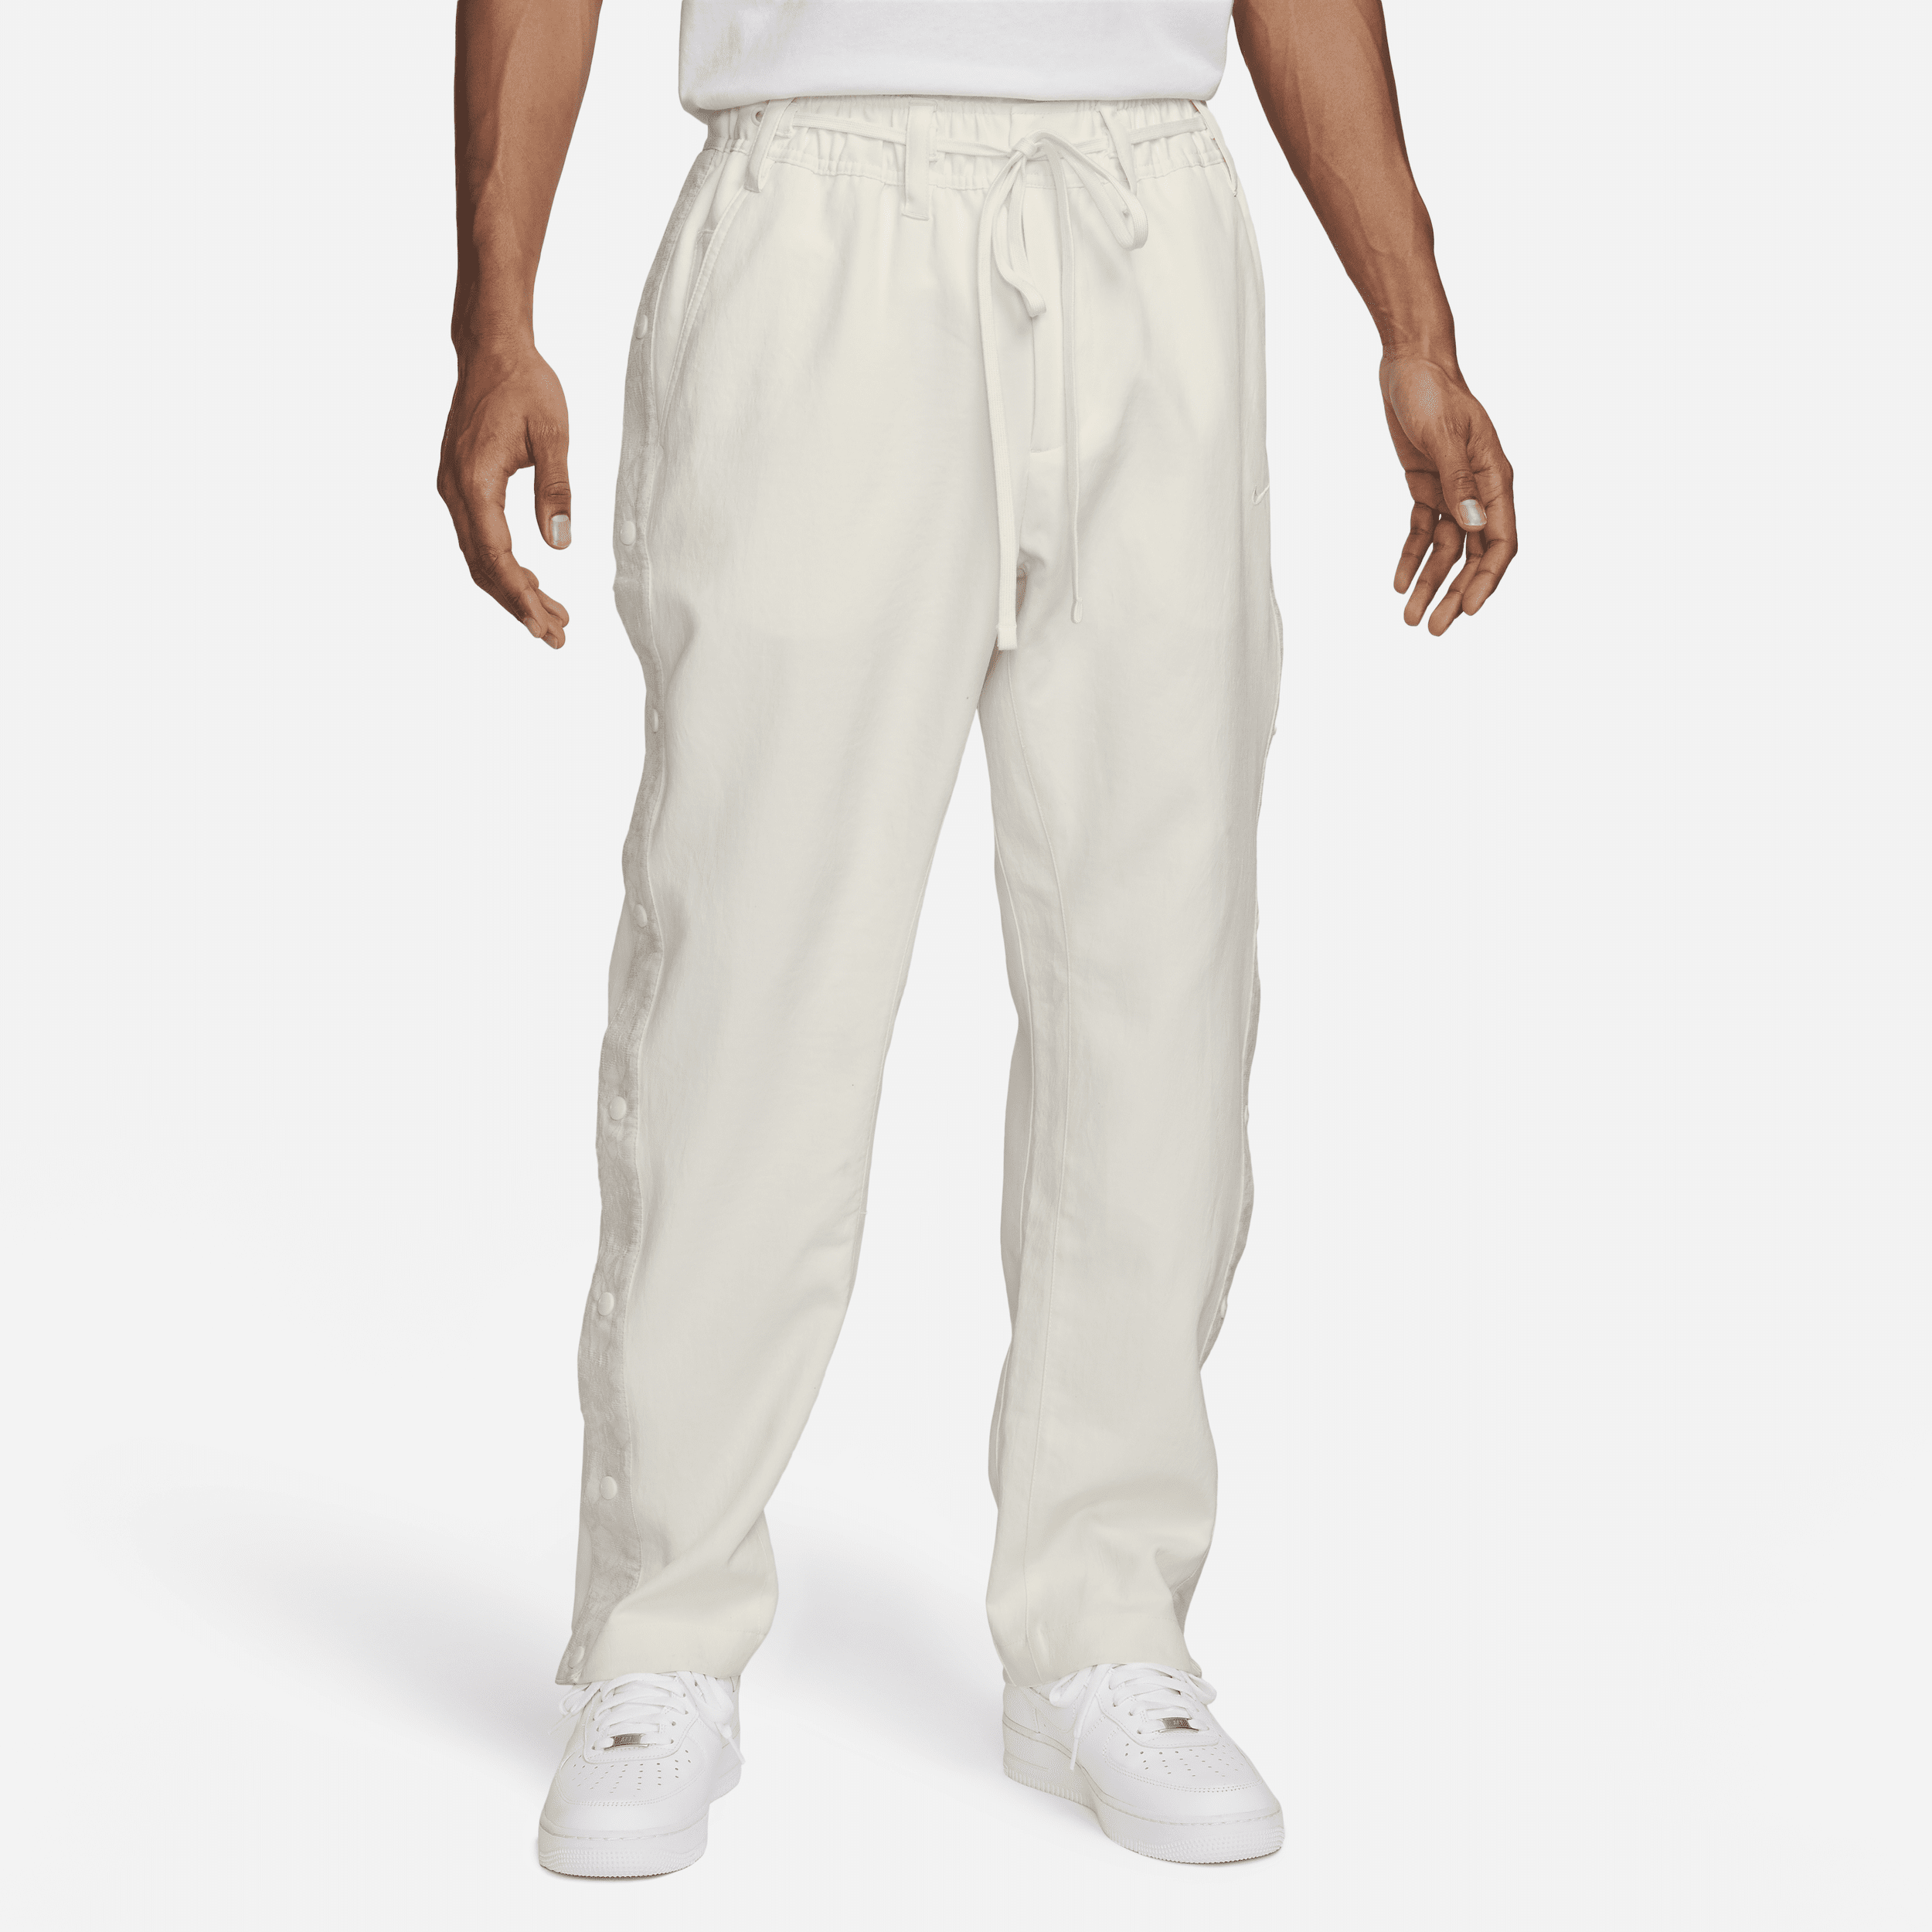 Pantaloni da basket con bottoni laterali Nike – Uomo - Bianco